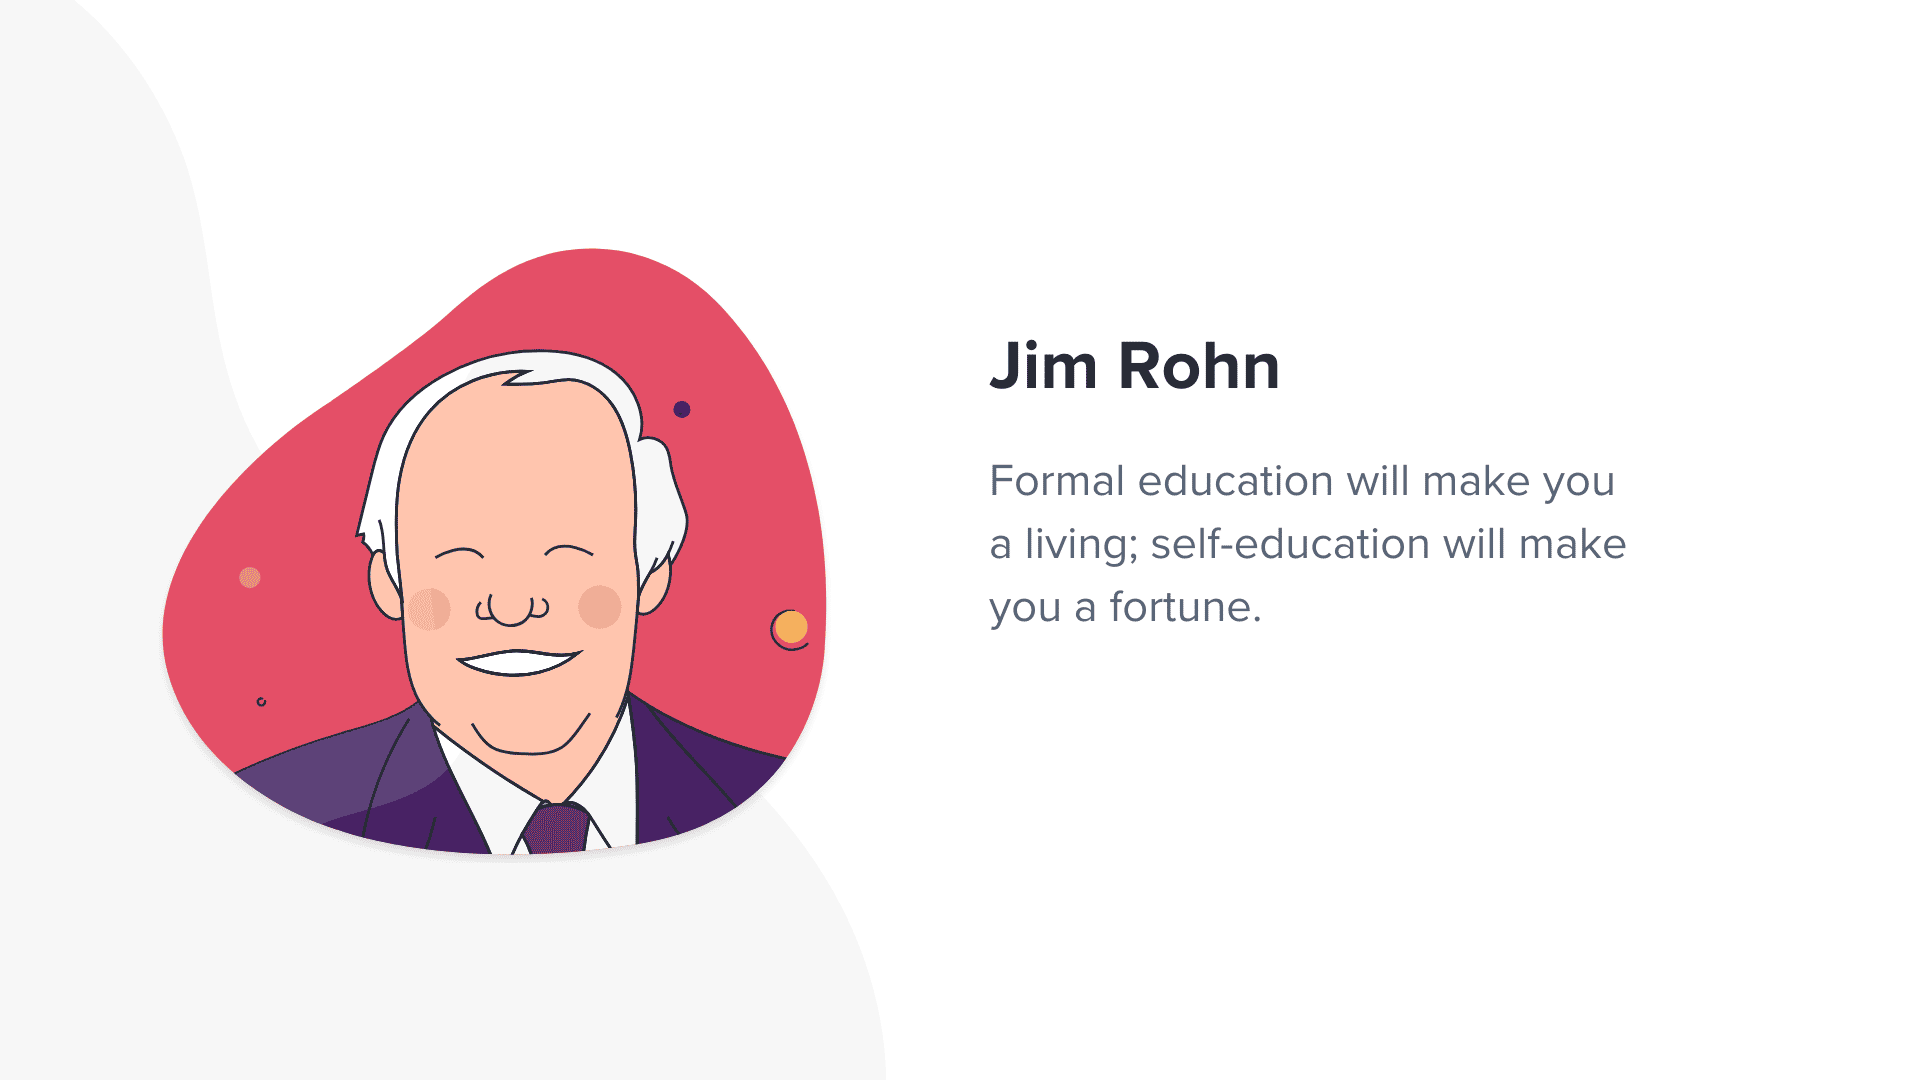 Jim Rohn successful entrepreneur quote